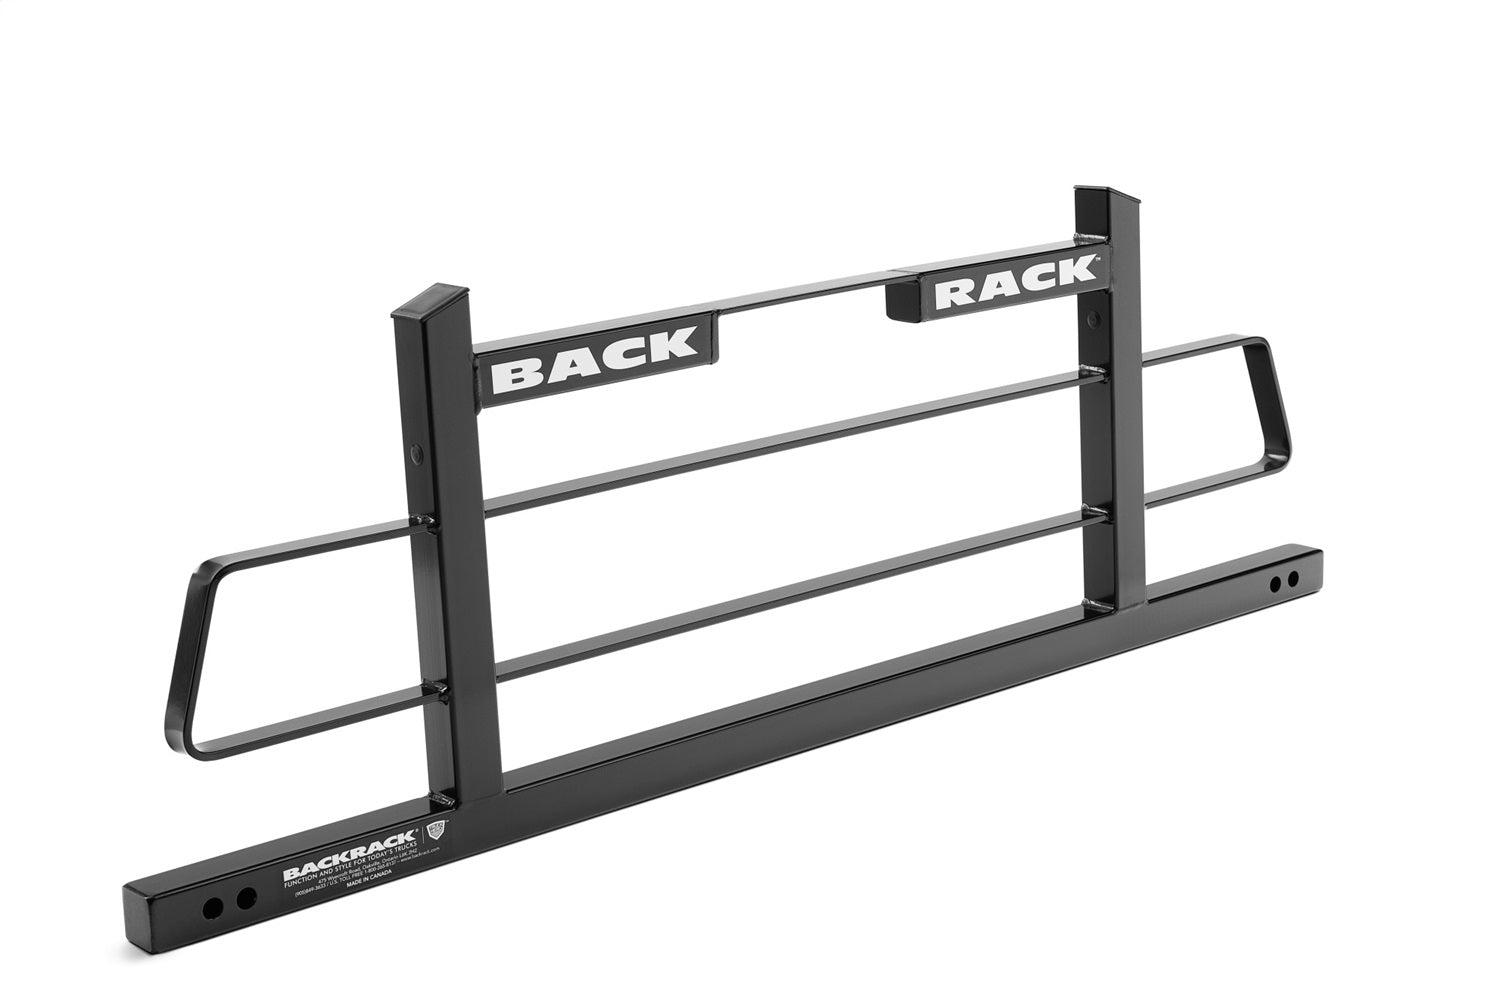 Backrack 15002 Backrack Headache Rack Frame